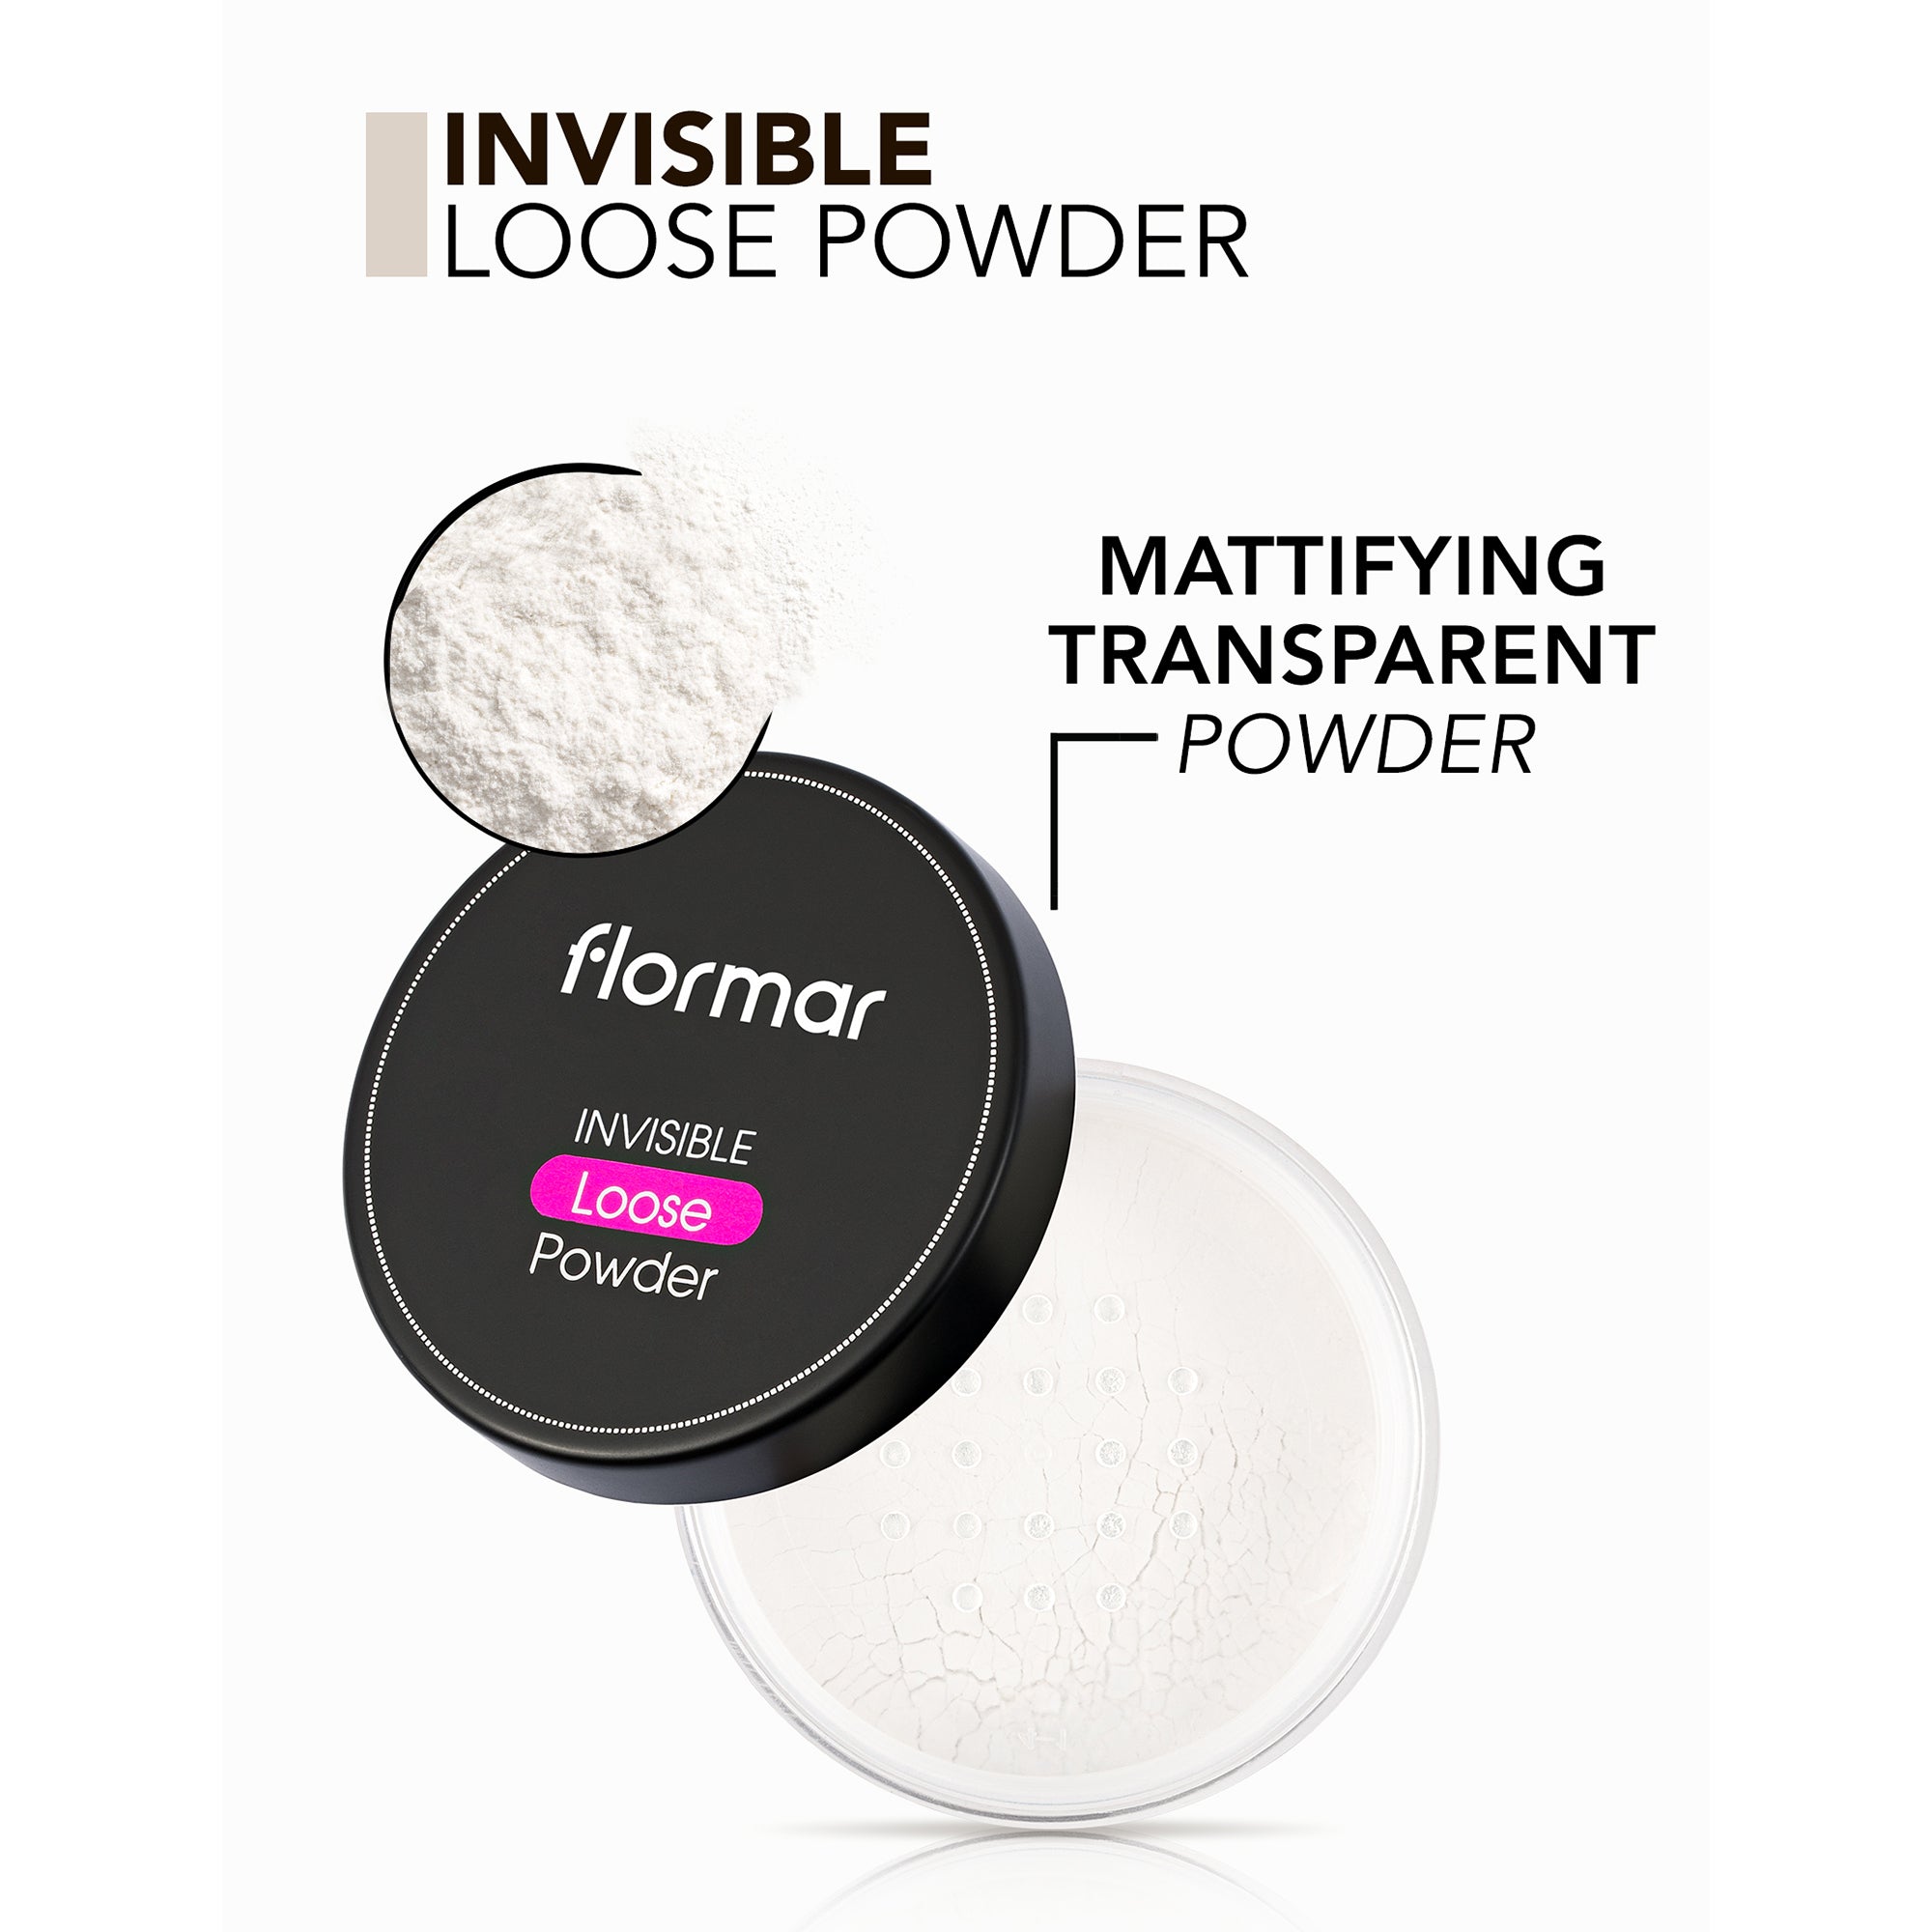 Invisible Loose Powder